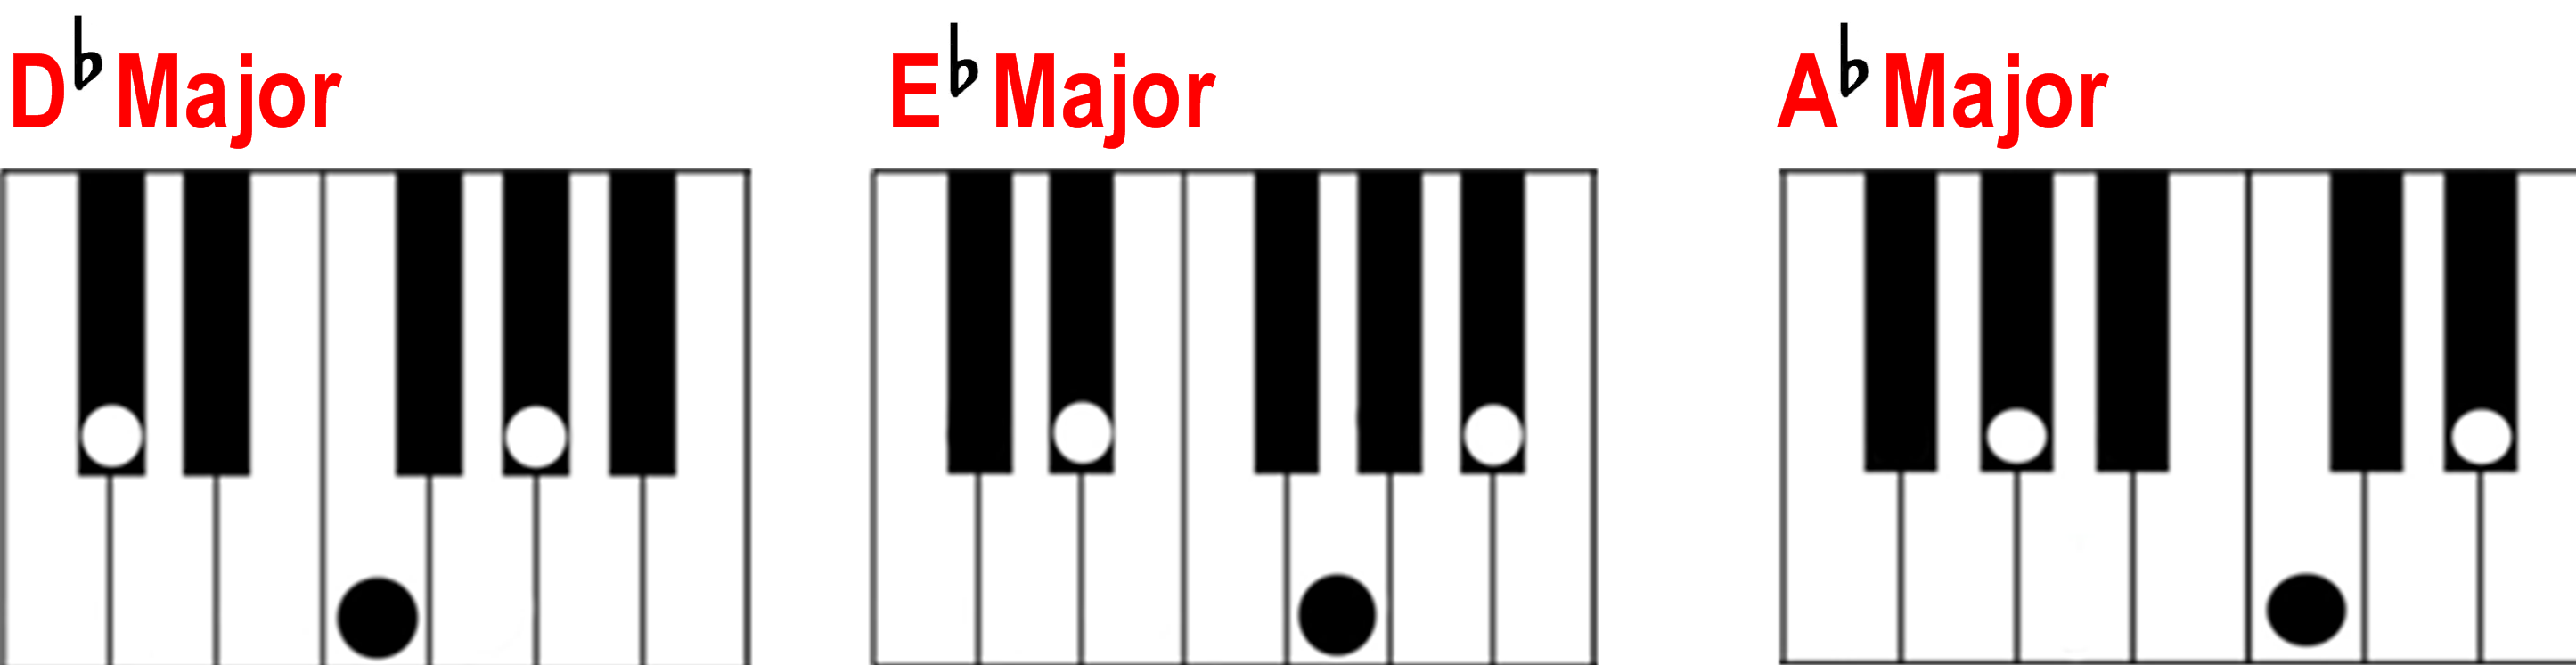 D fllat E flat A flat major chords on the piano keyboard